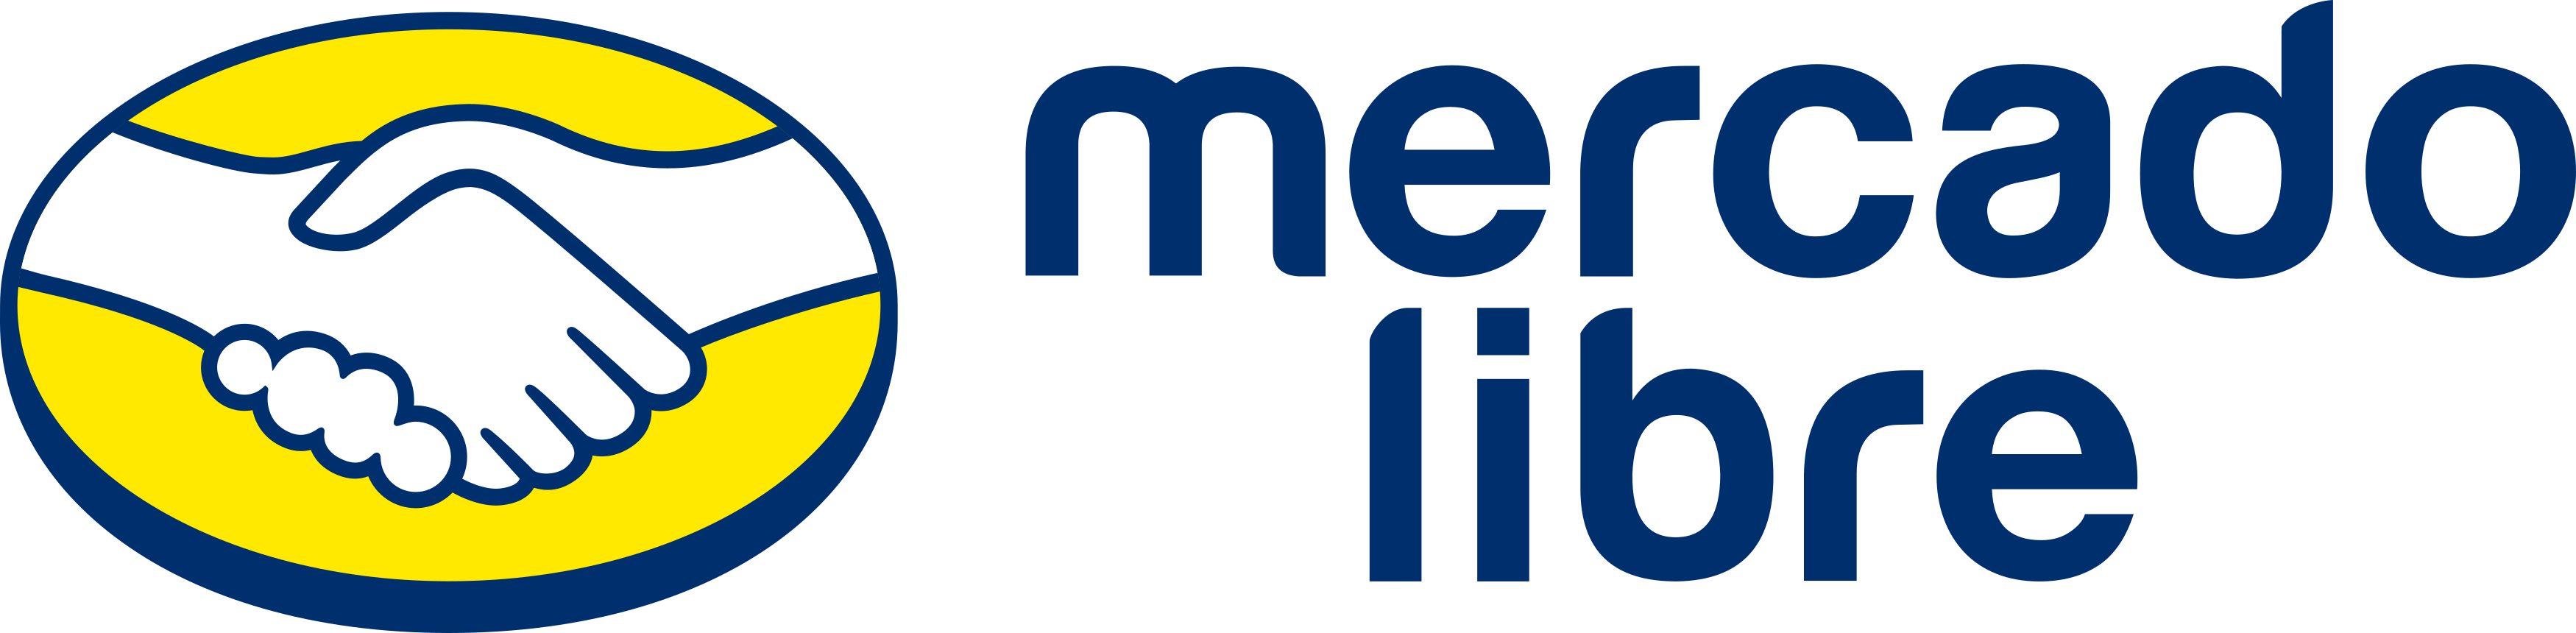 Mercadolibre Logo - PNG and Vector